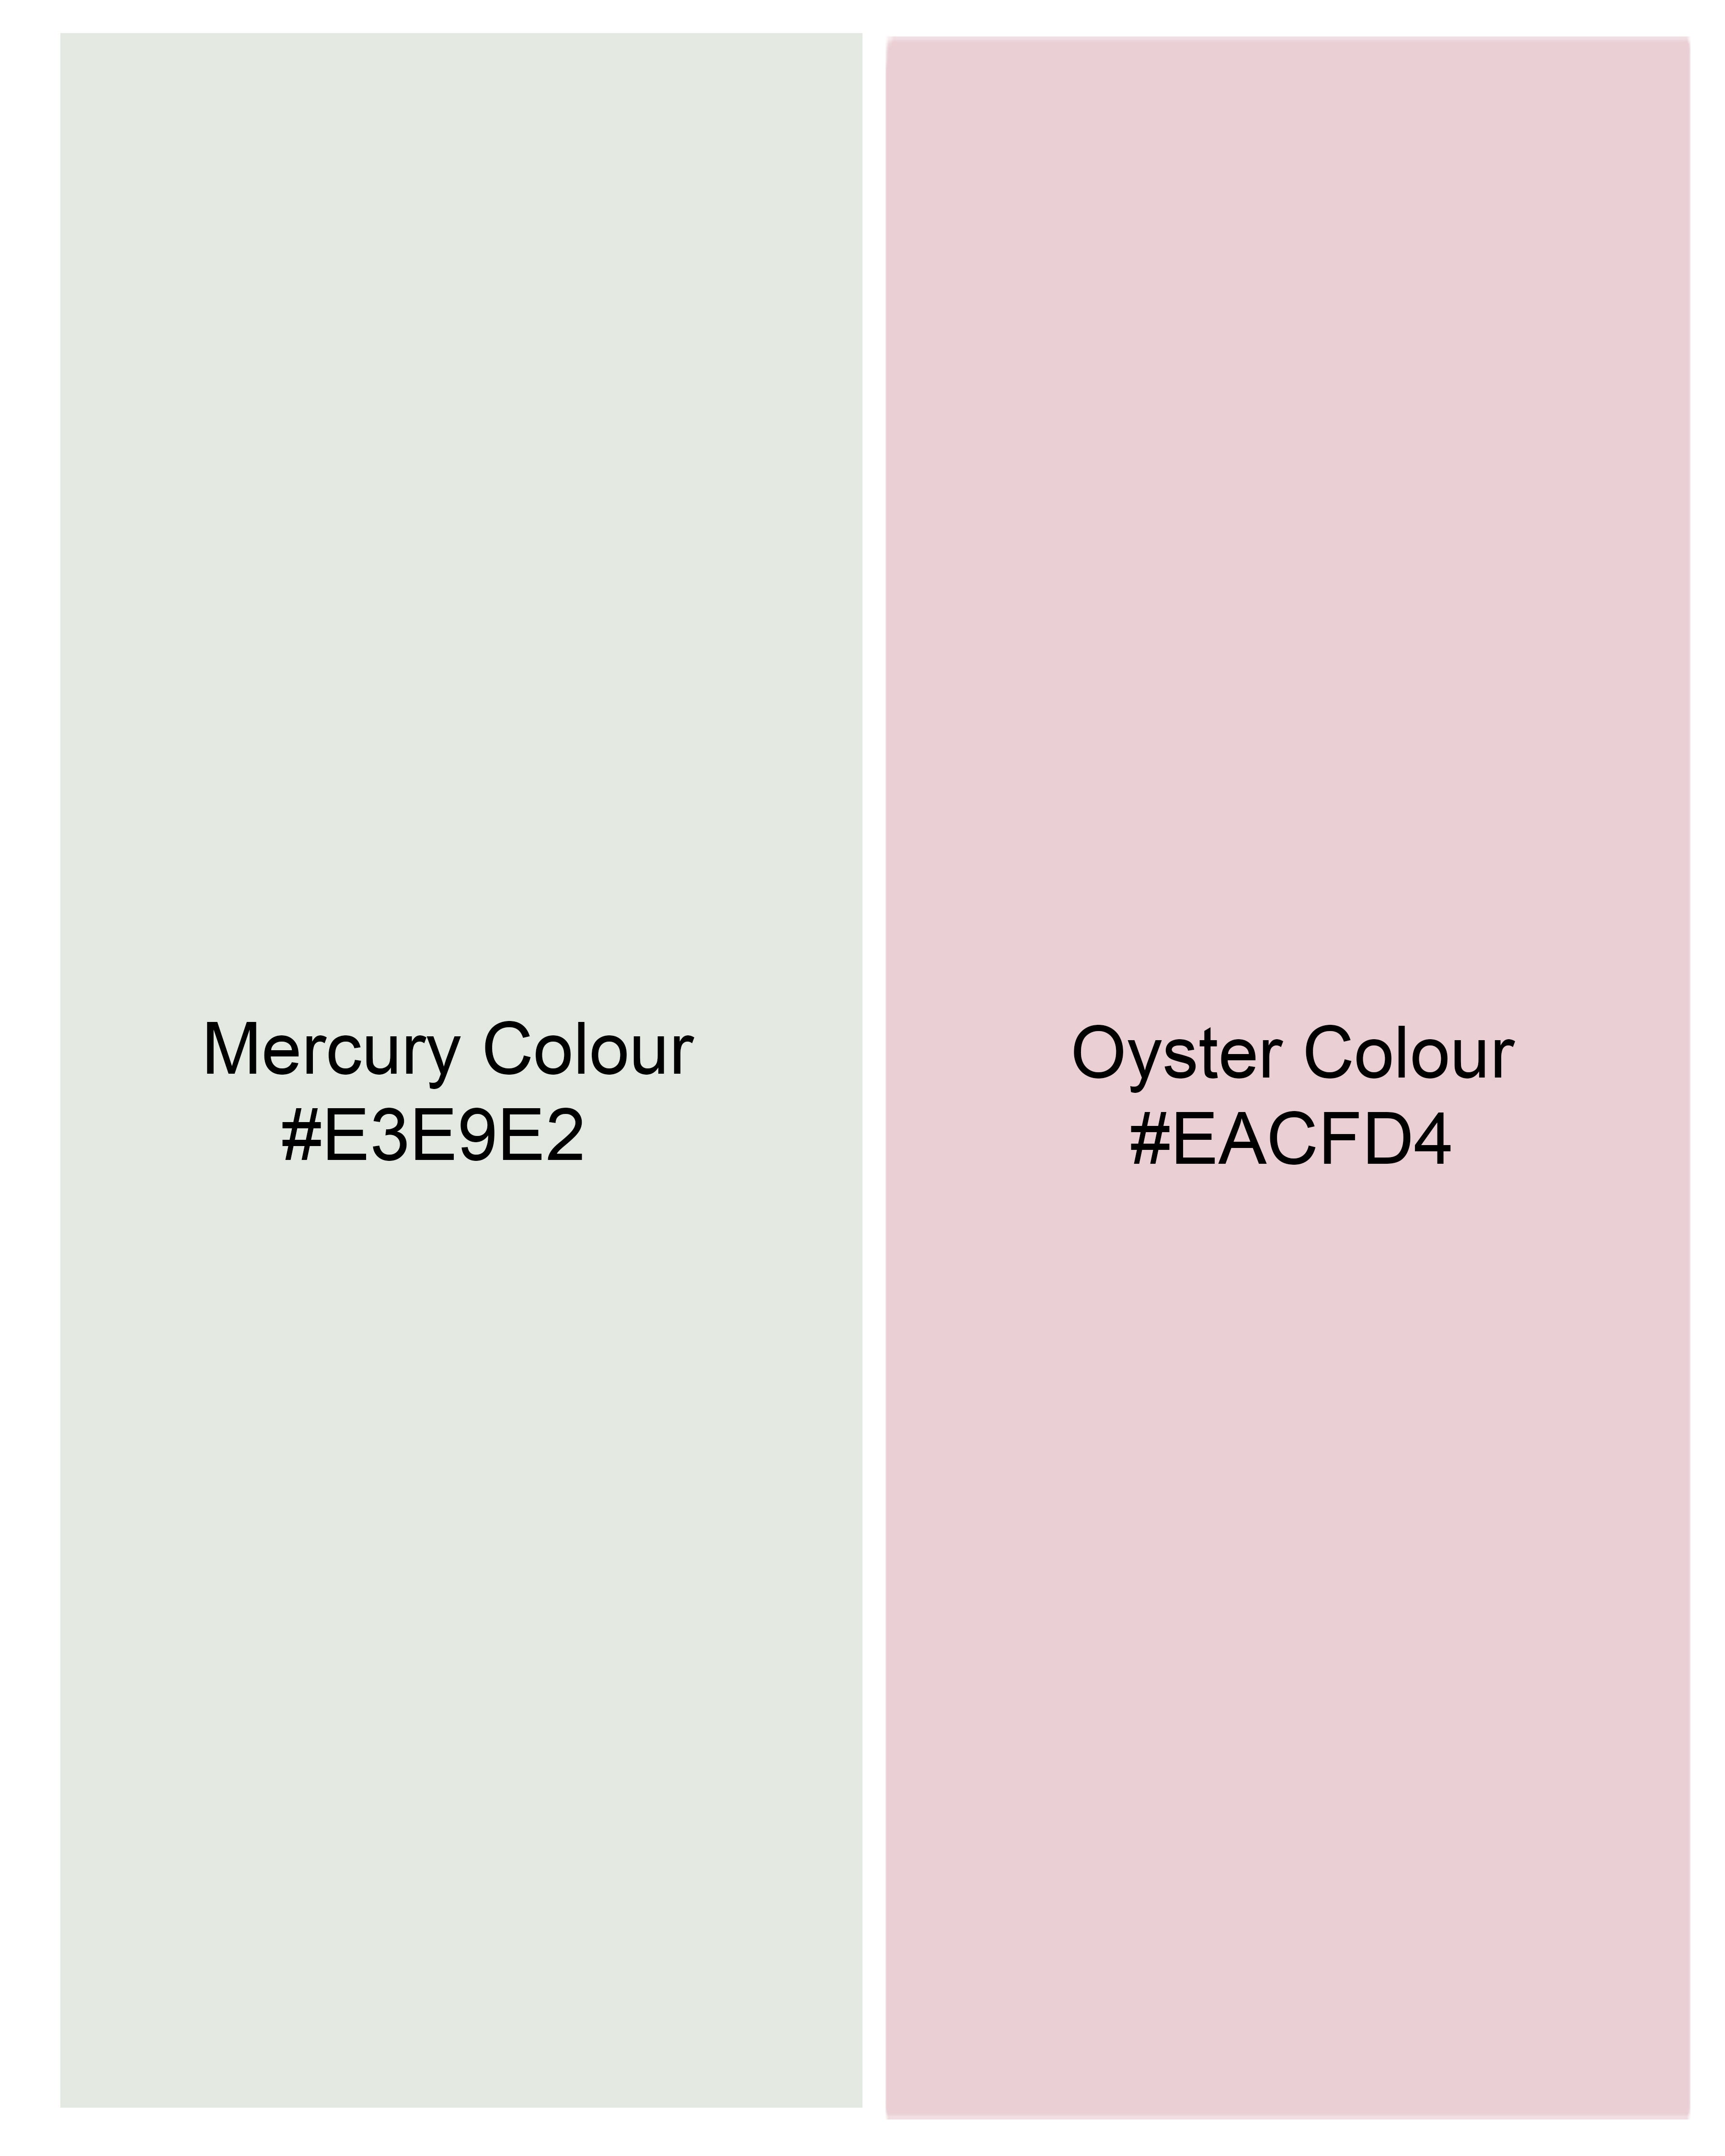 Mercury Green and Oyster Pink Cotton Thread Embroidered Bandhgala Blazer BL2423-BG-36,BL2423-BG-38,BL2423-BG-40,BL2423-BG-42,BL2423-BG-44,BL2423-BG-46,BL2423-BG-48,BL2423-BG-50,BL2423-BG-52,BL2423-BG-54,BL2423-BG-56,BL2423-BG-58,BL2423-BG-60